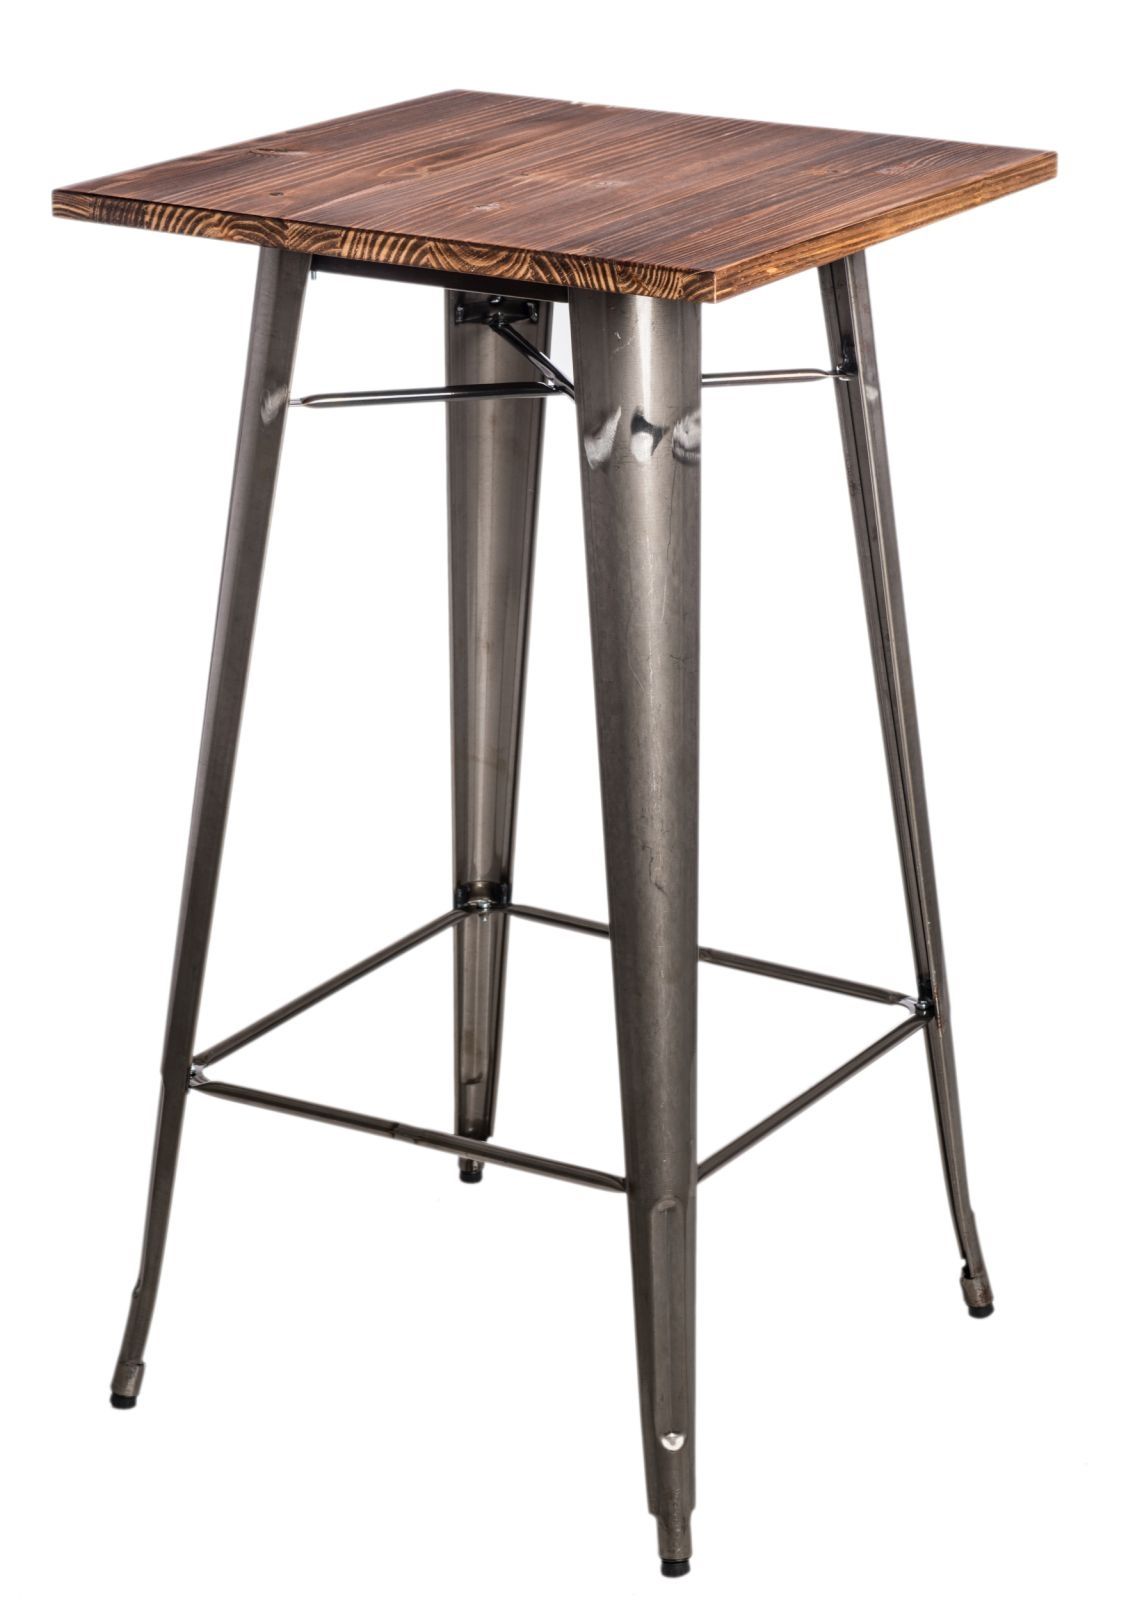  Stôl barový Paris Wood metalický sosna - mobler.sk